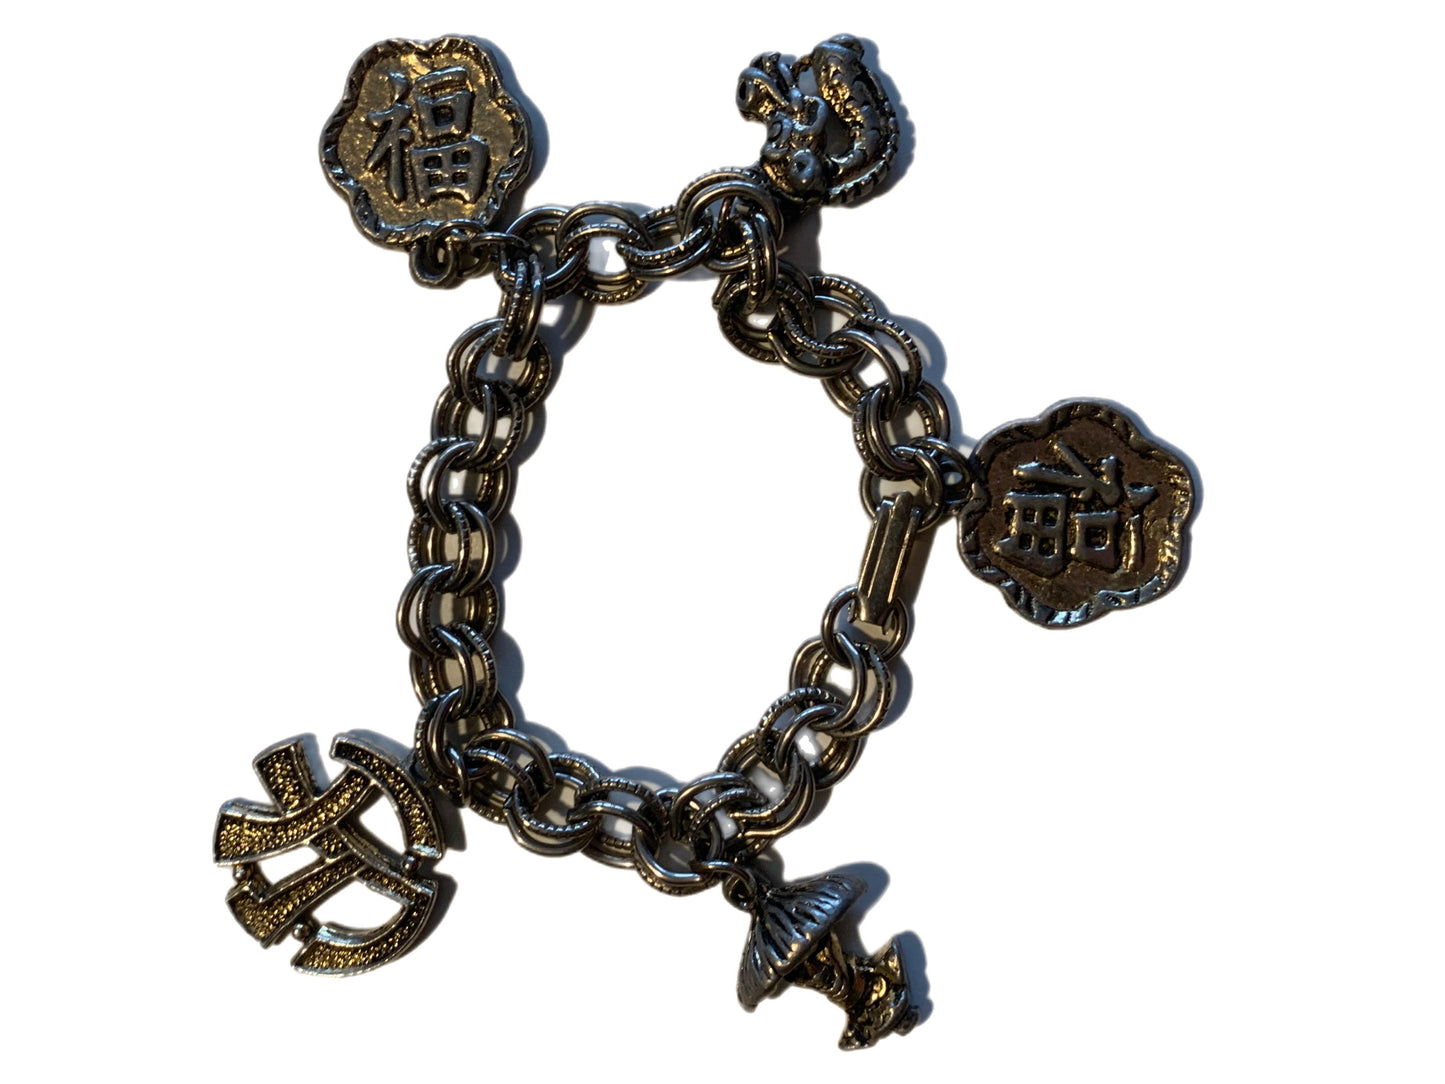 Asian Themed Charm Bracelet circa 1960s